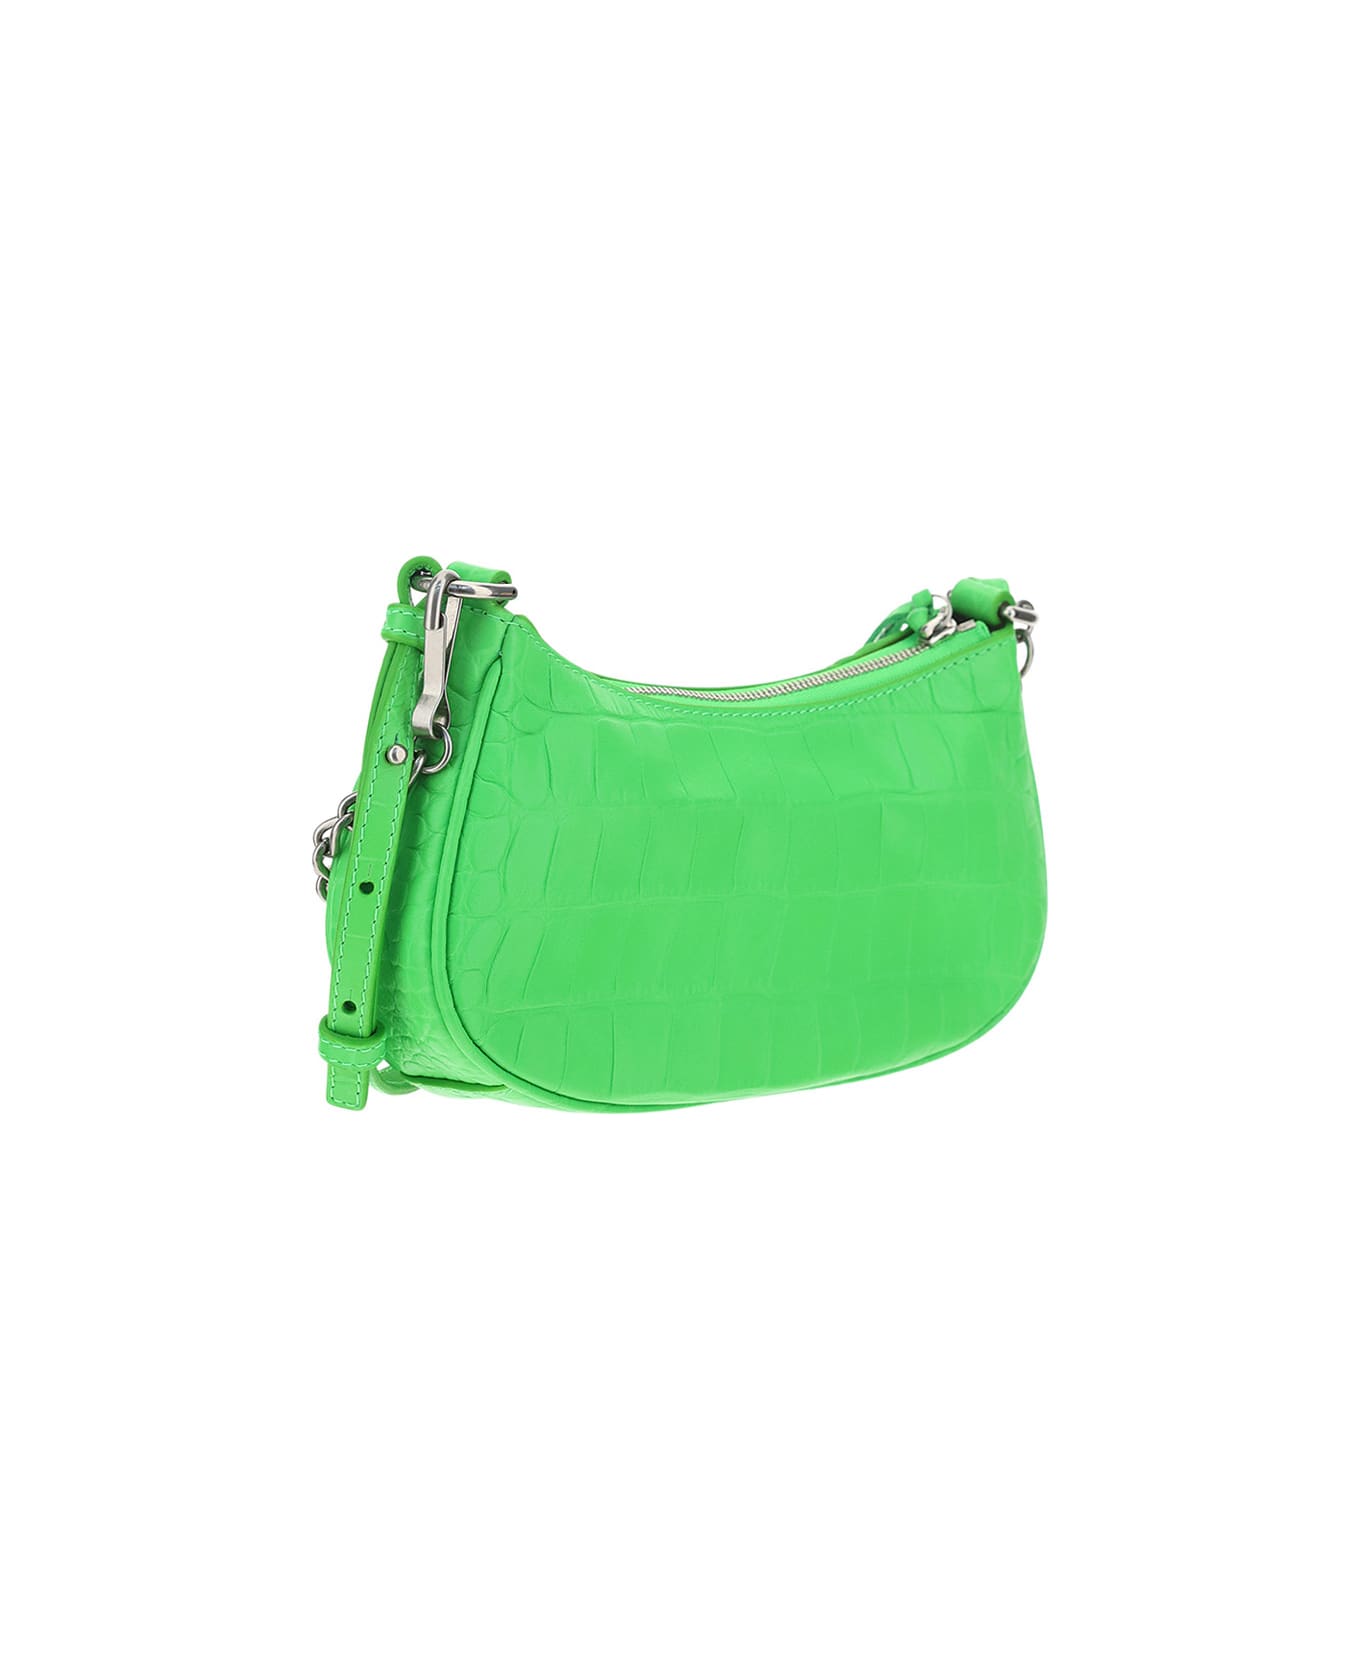 Balenciaga Chain Bag - Acid Green